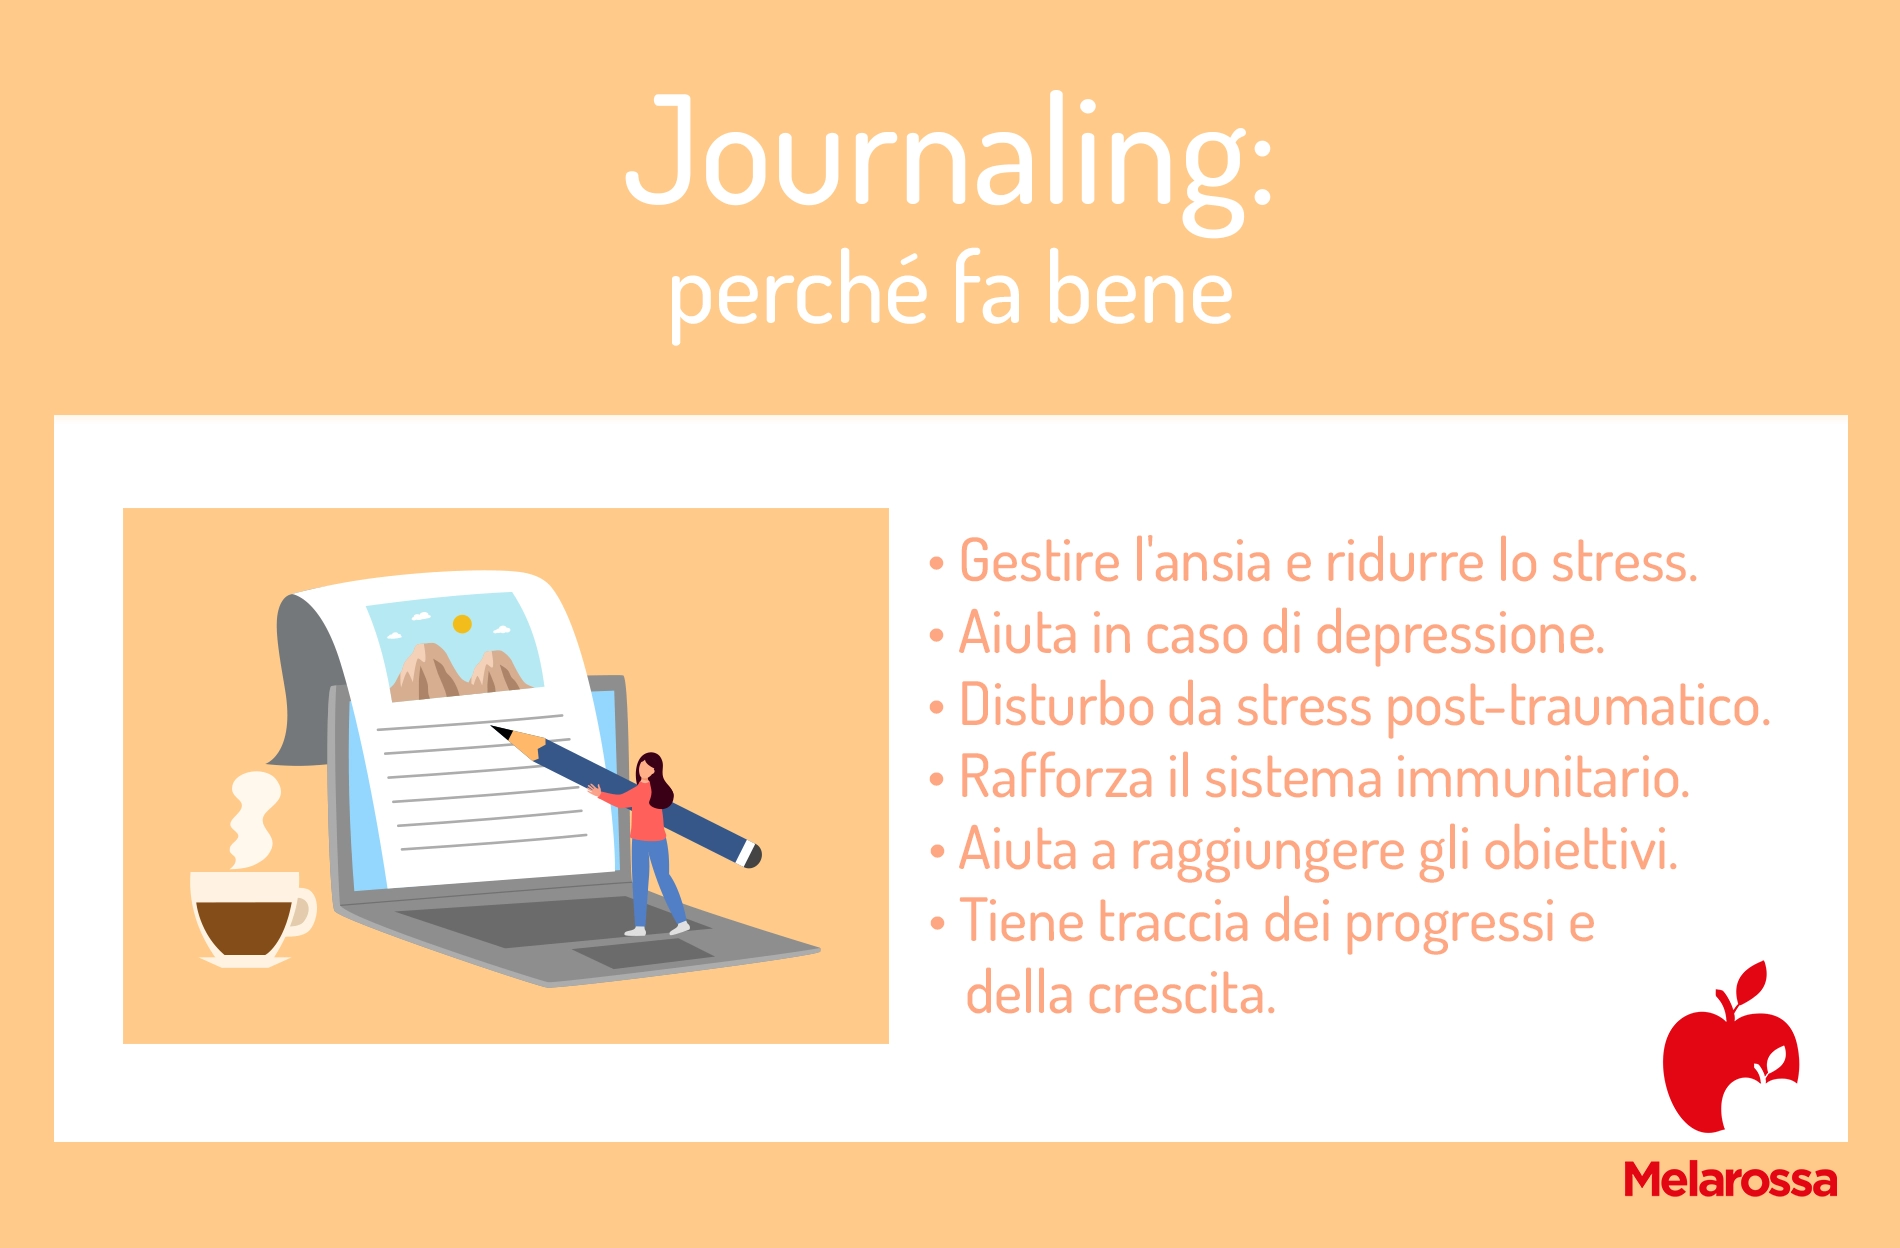 journaling: benefici mentali e fisici